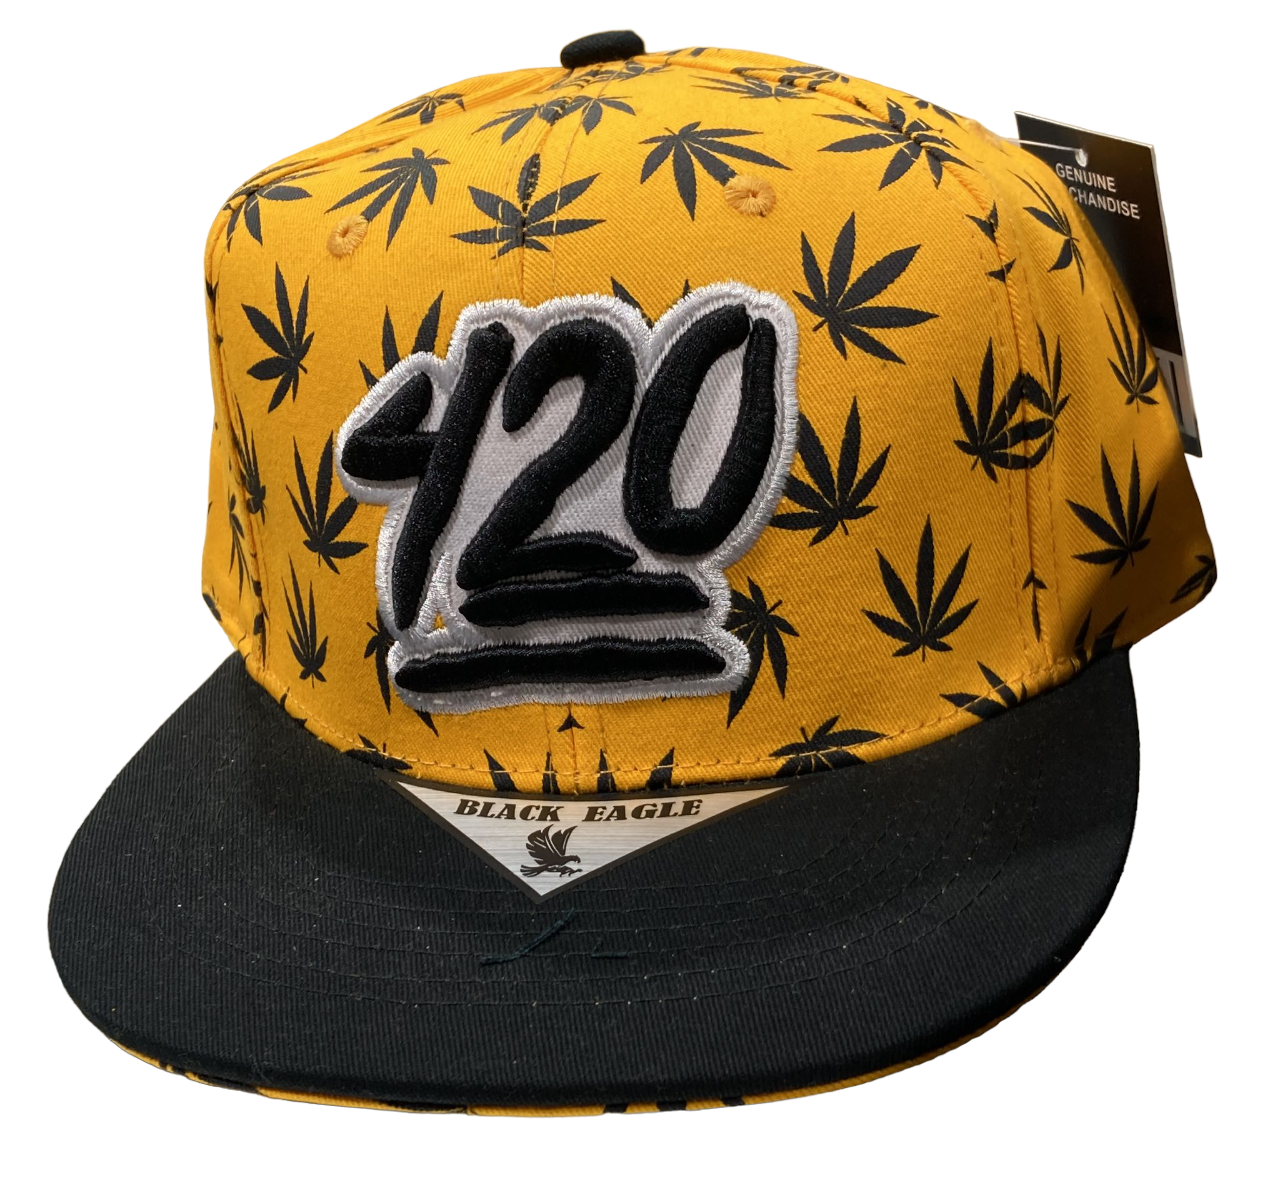 Adjustable Baseball Hat - 420 Marijuana Printed (Yellow/Black) - MK Distro